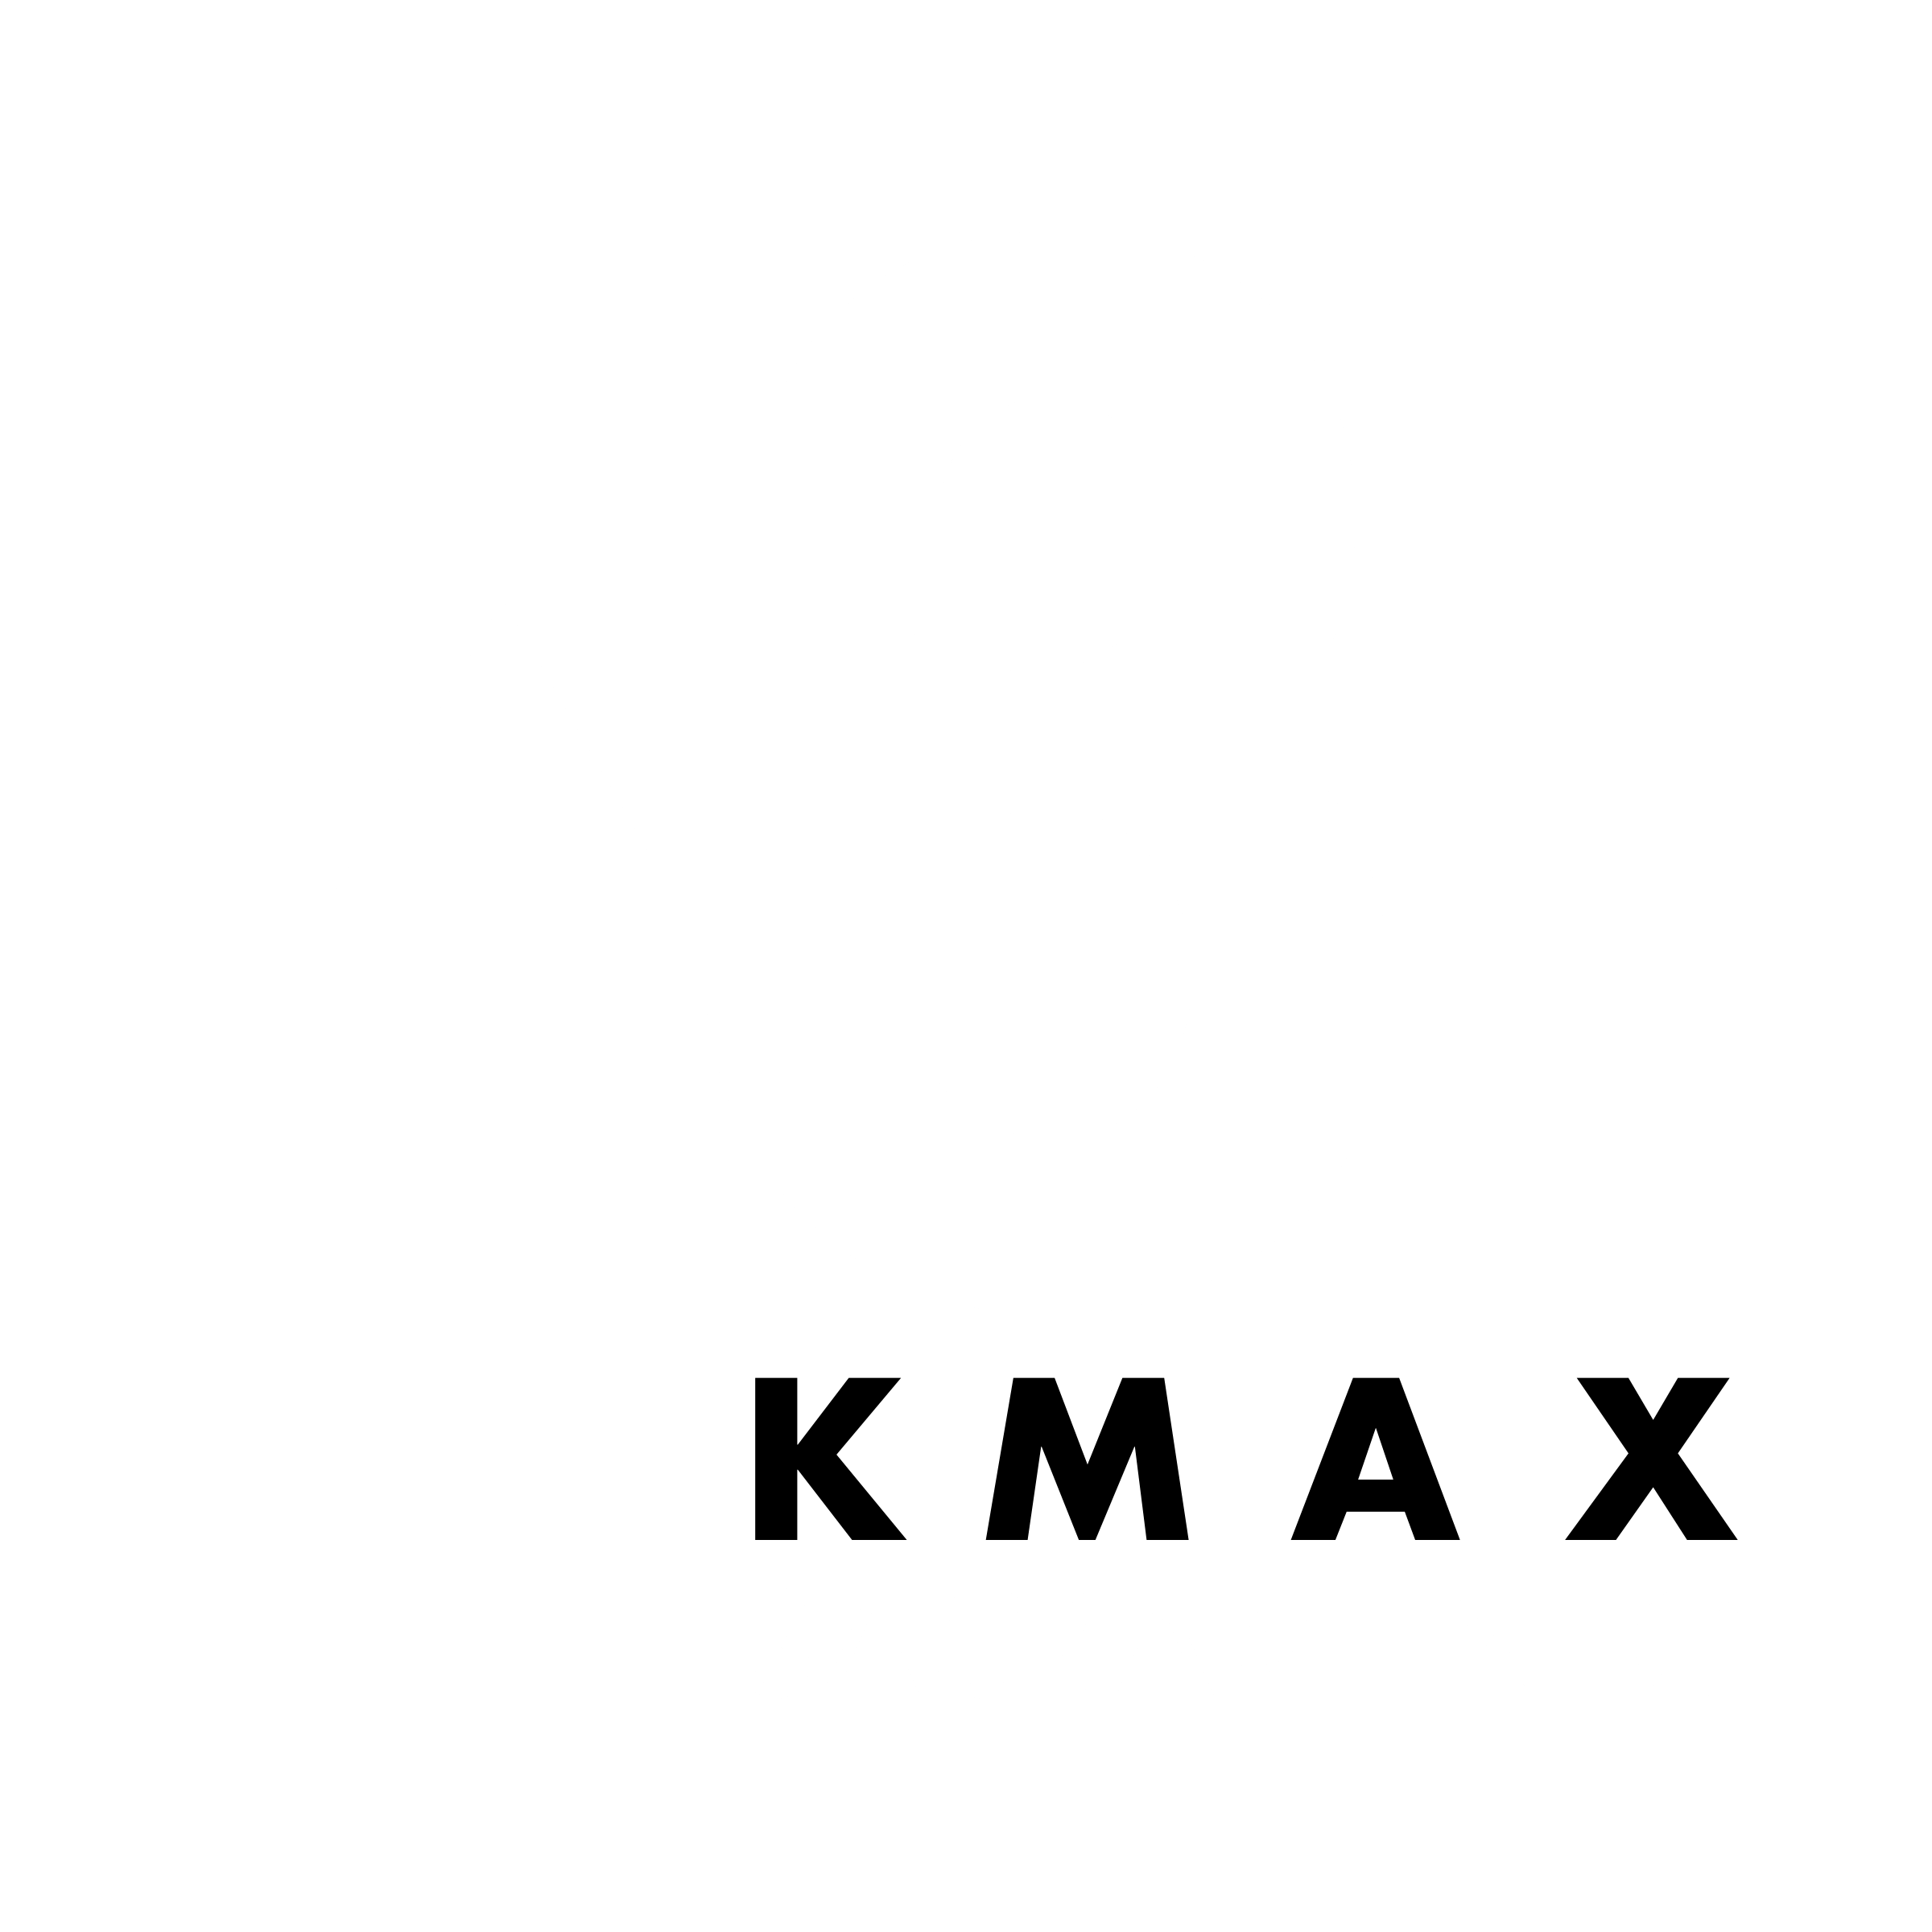 UPN Logo - UPN 31 KMAX Sacramento Logo PNG Transparent & SVG Vector - Freebie ...